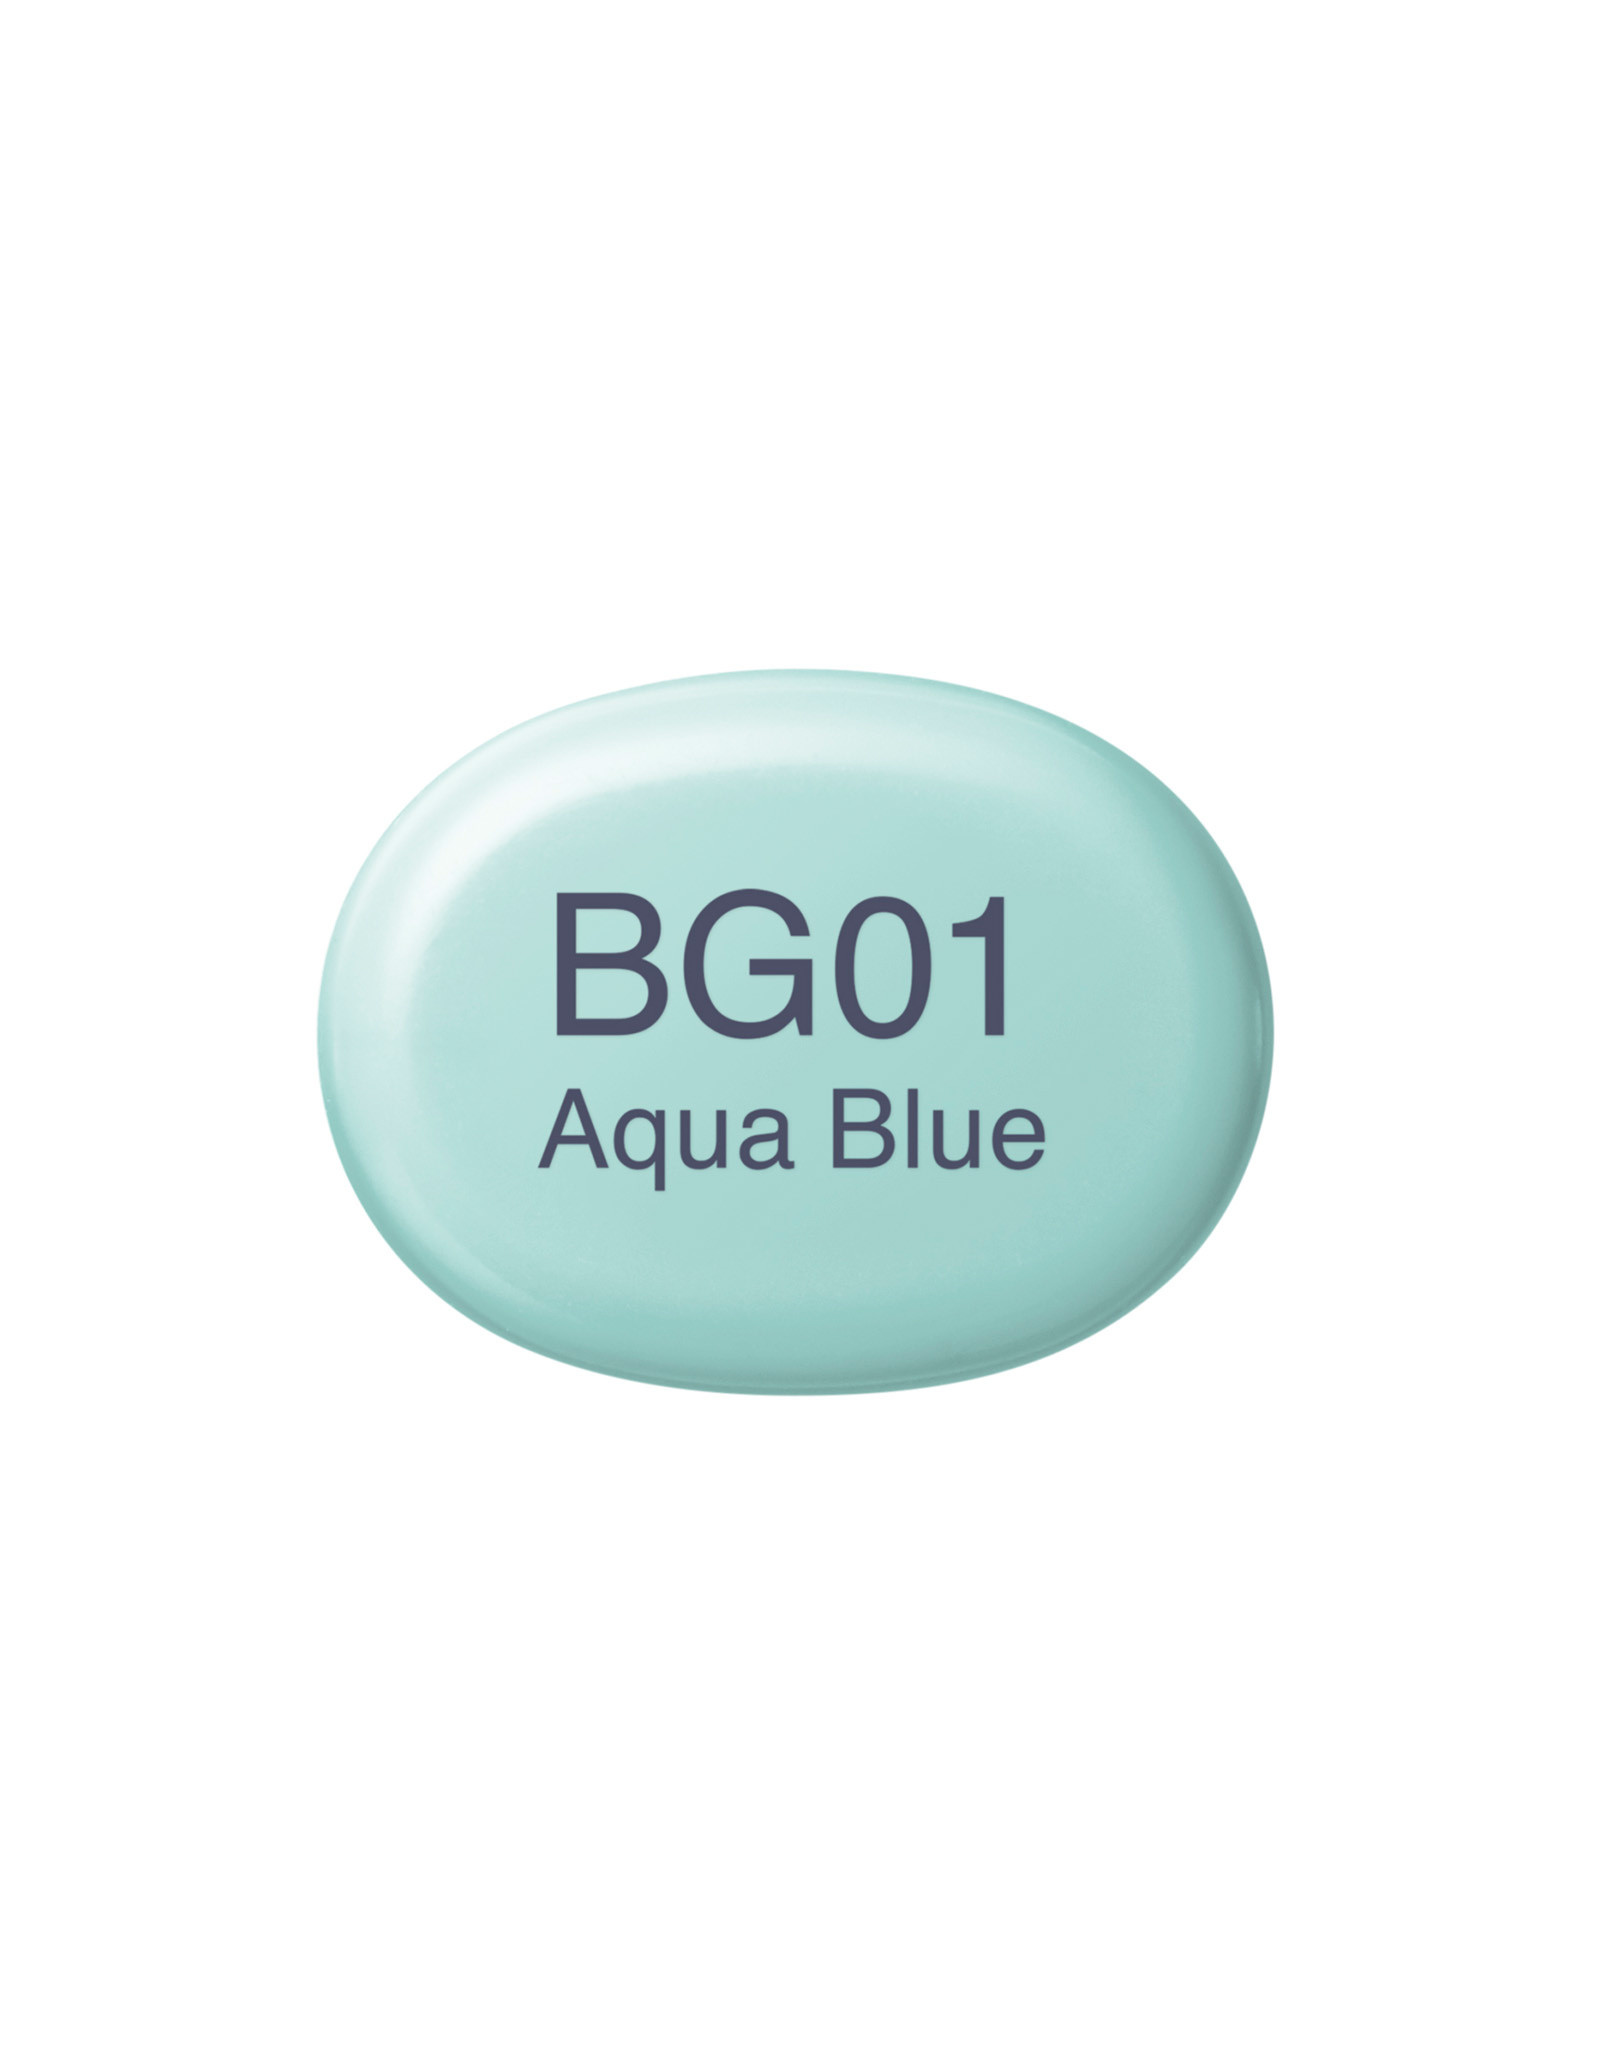 COPIC COPIC Sketch Marker BG01 Aqua Blue